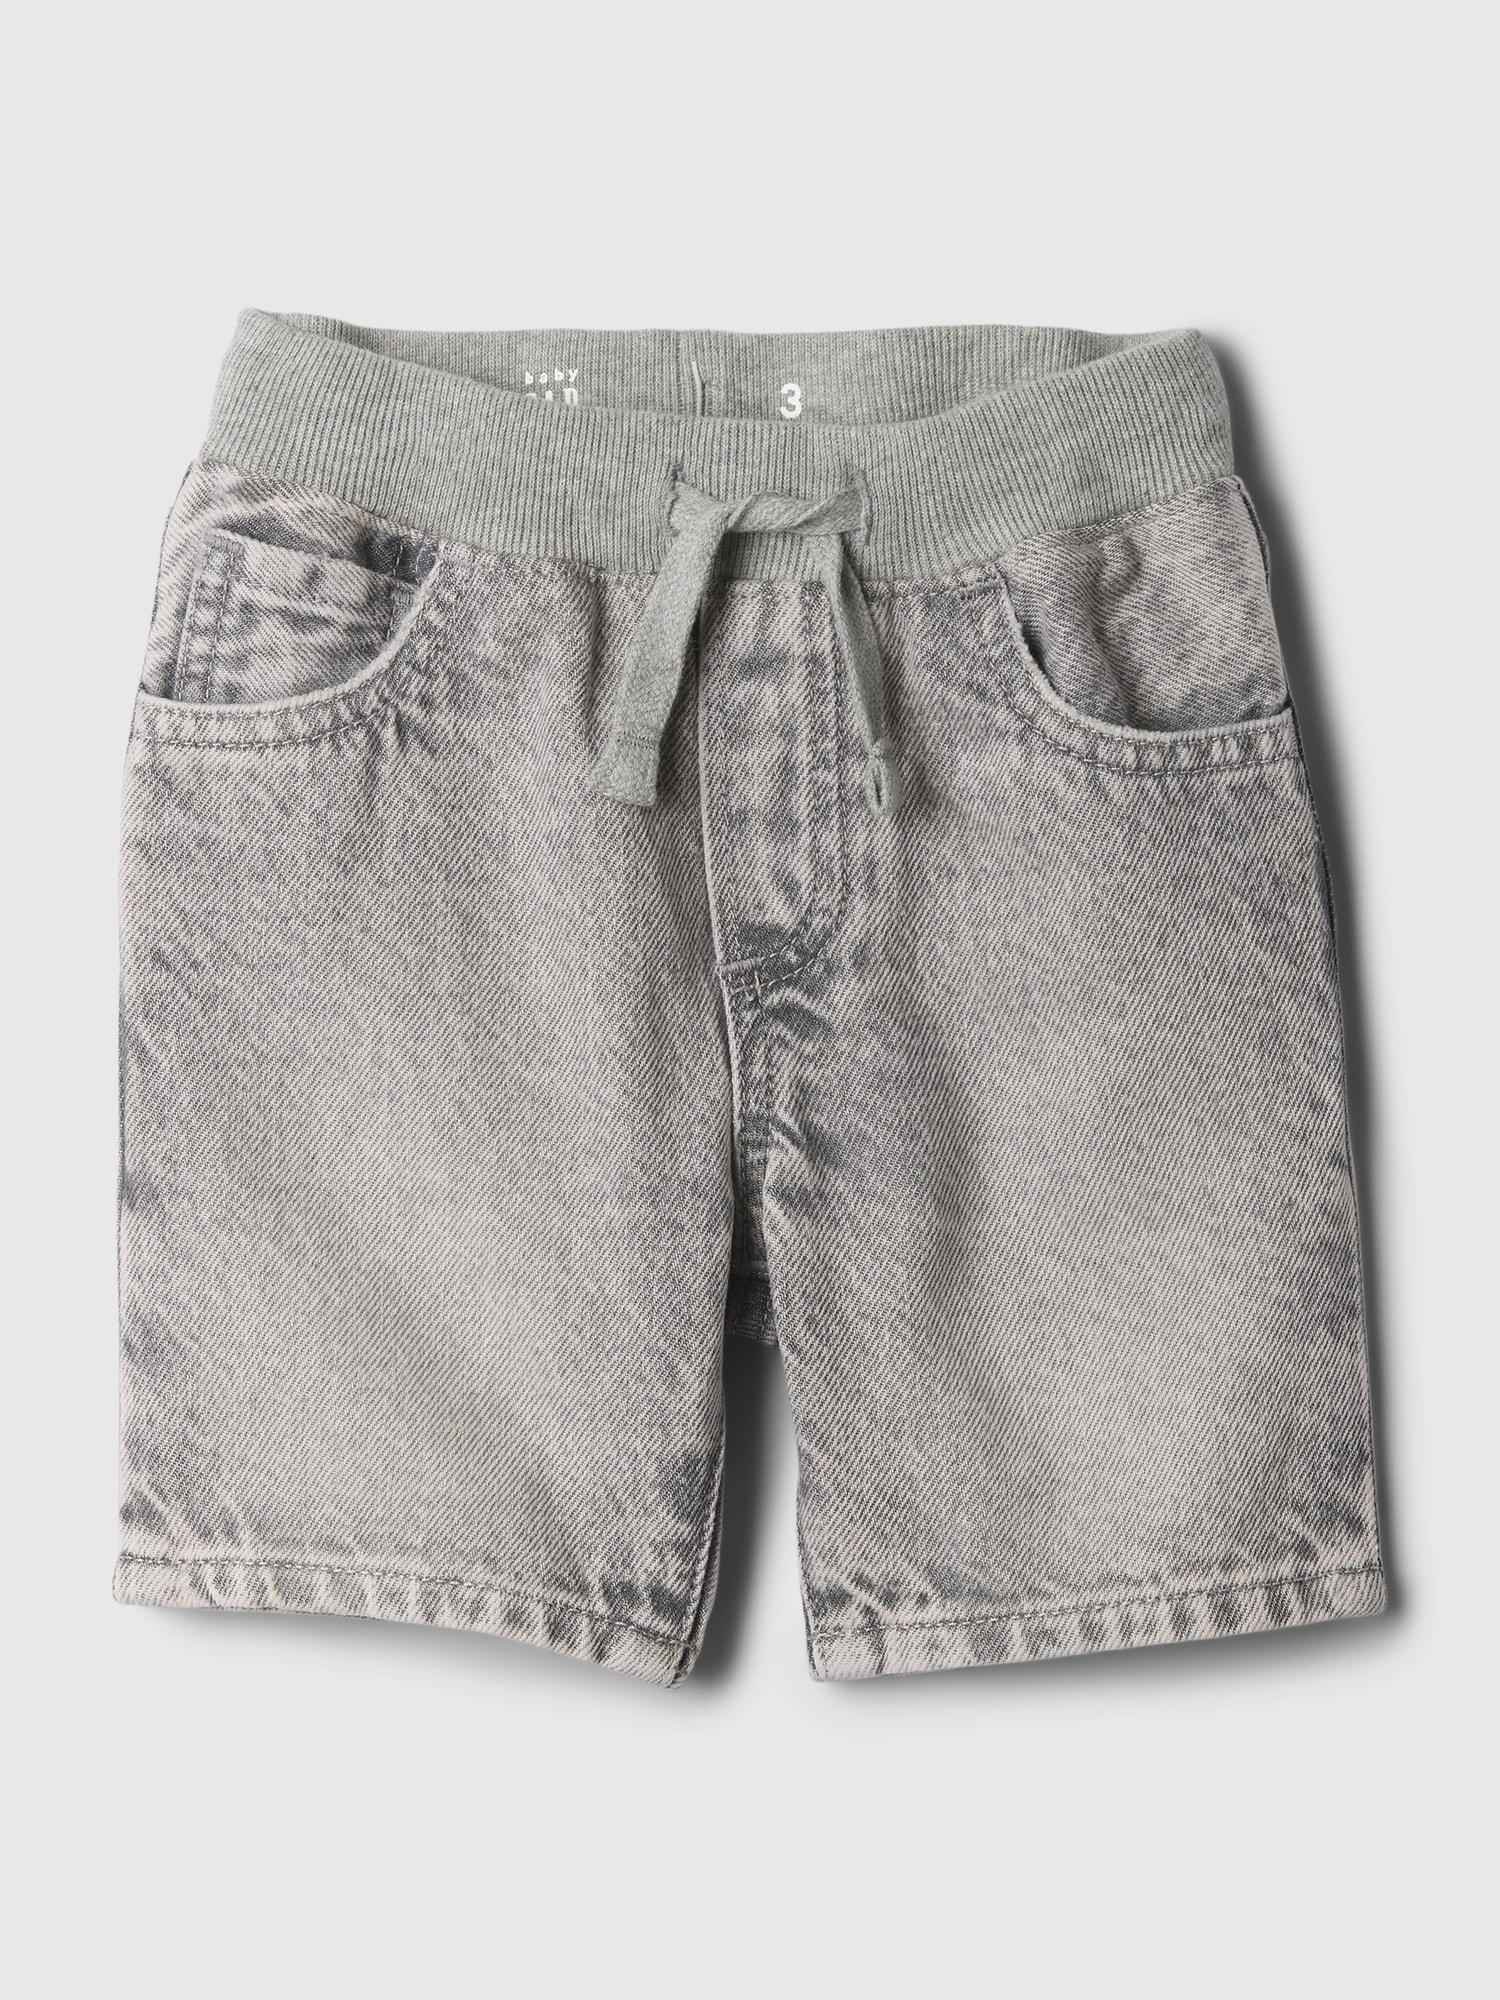 babyGap Pull-On Denim Shorts | Gap